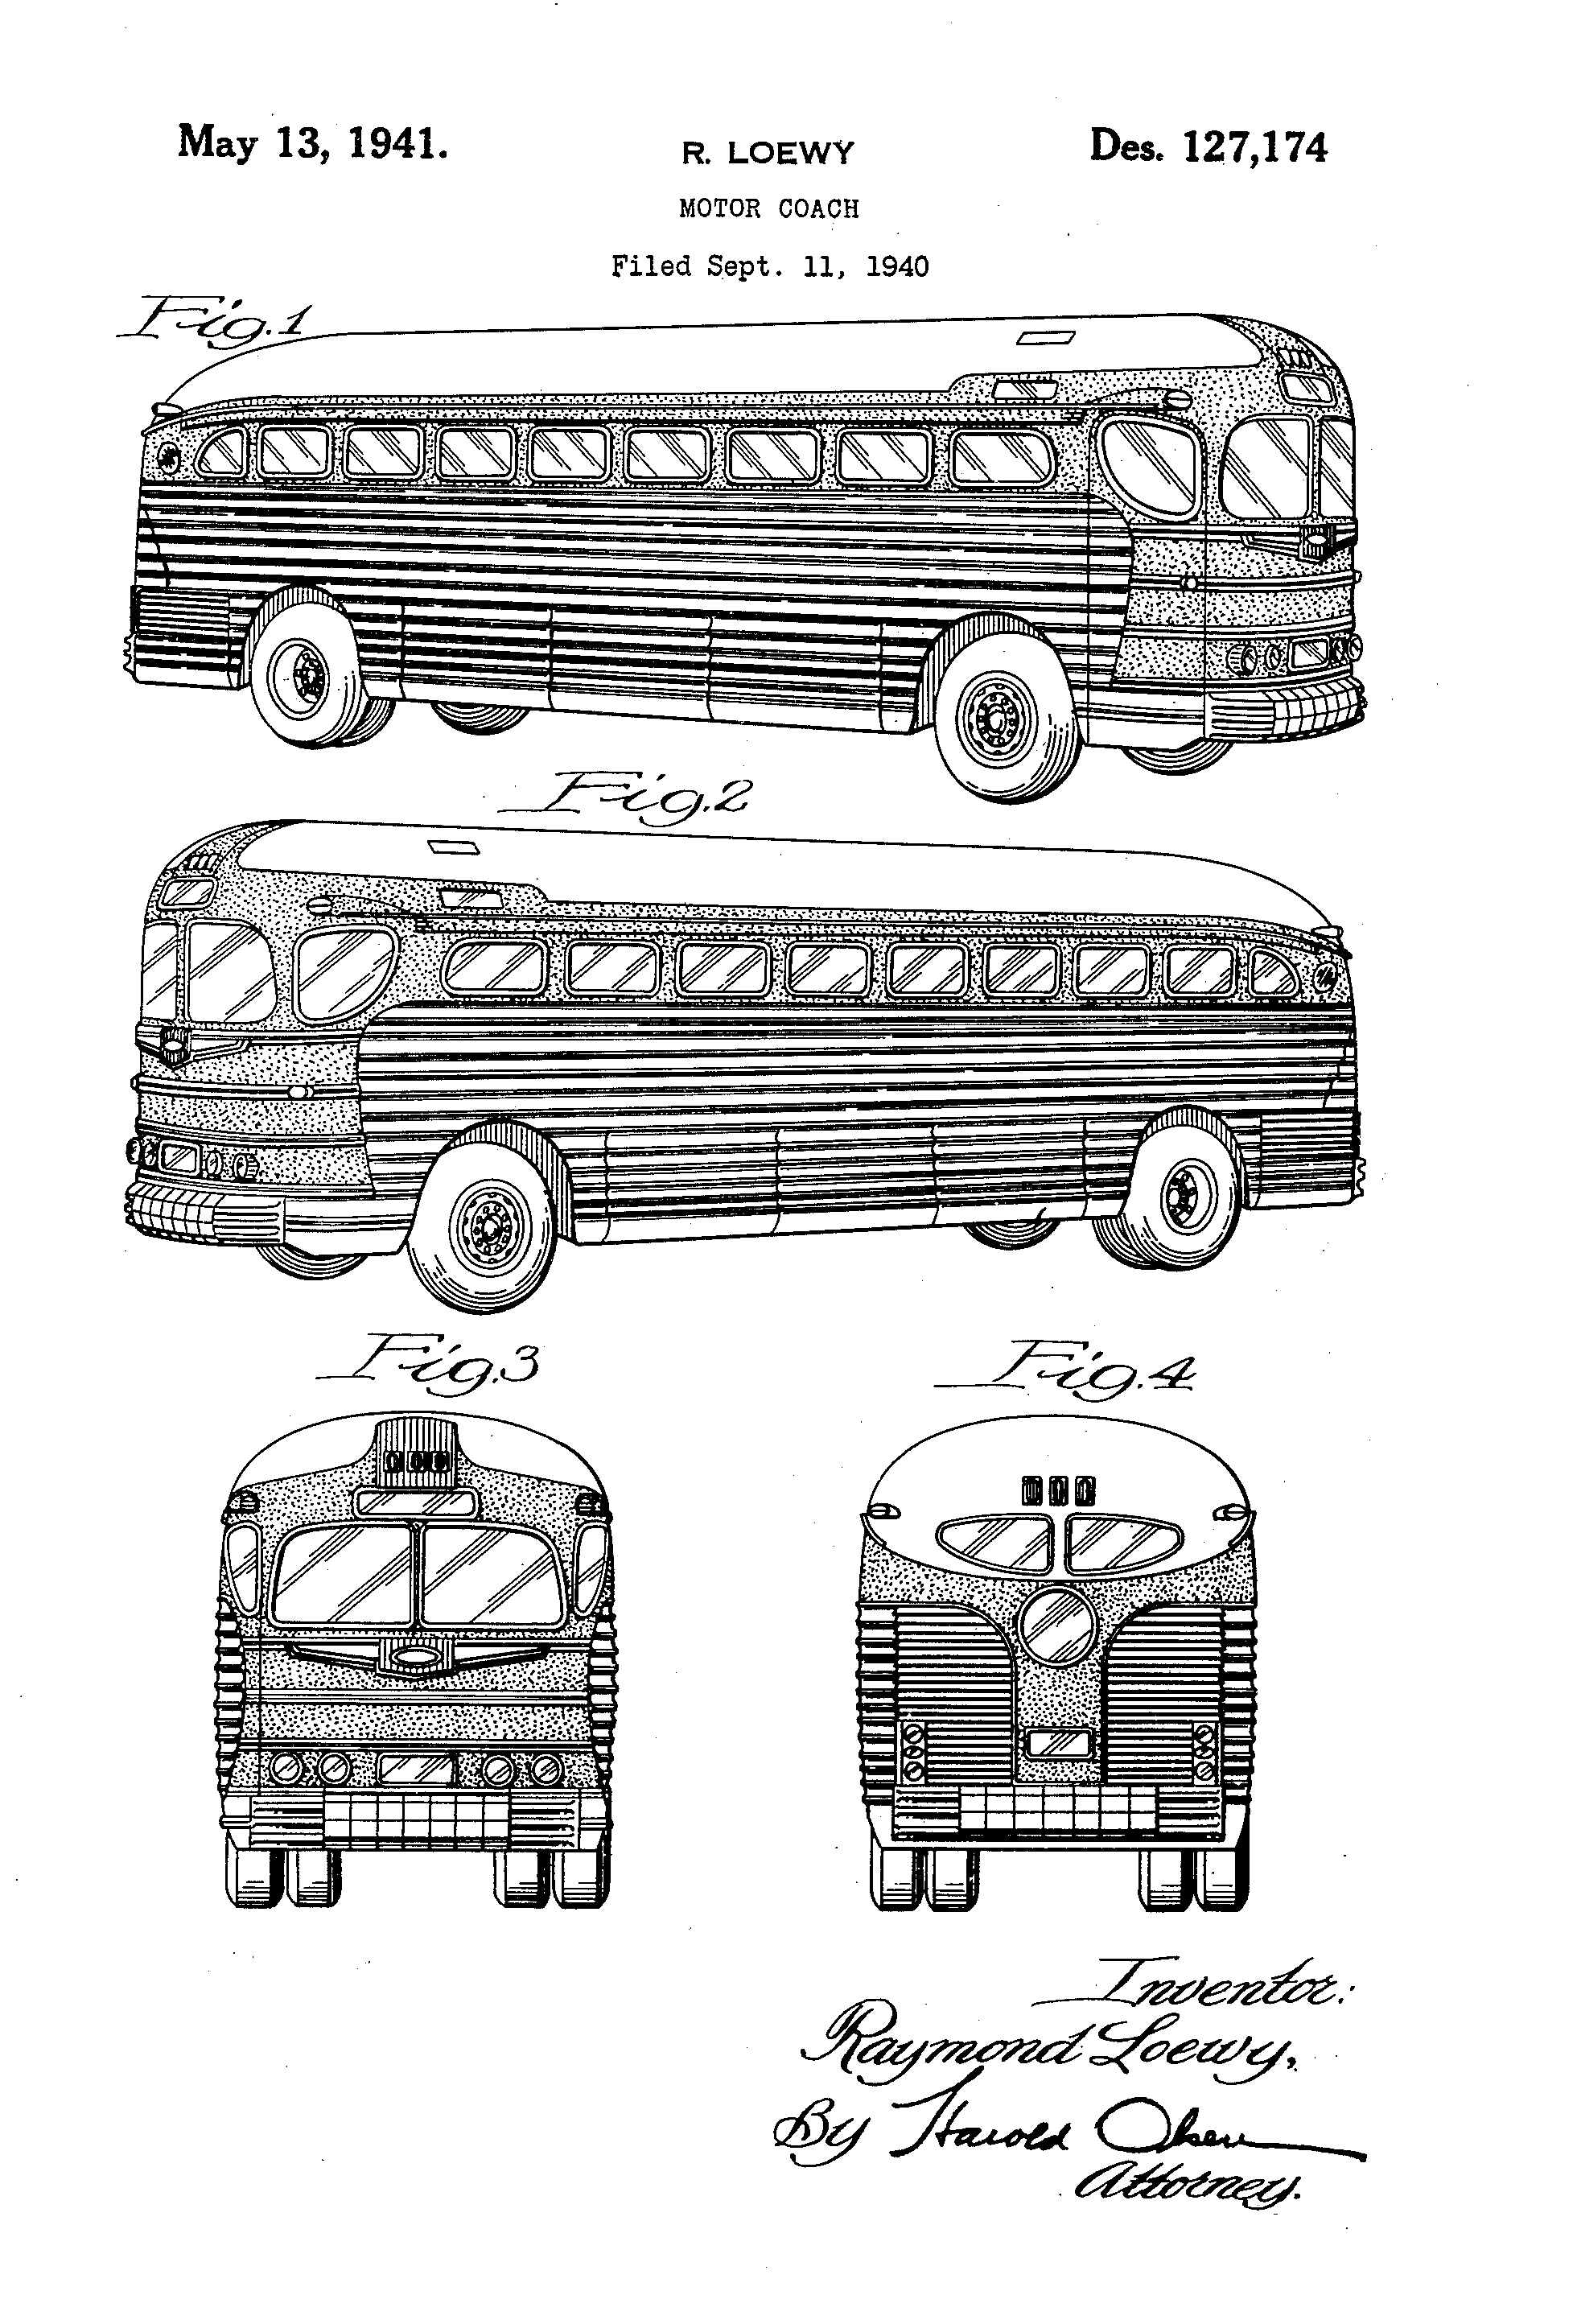 Motor Coach, Raymond Lowey, for Greyhound Corporation, 1940/1941. Patent Number: USD 127,174, U.S. Patent Office